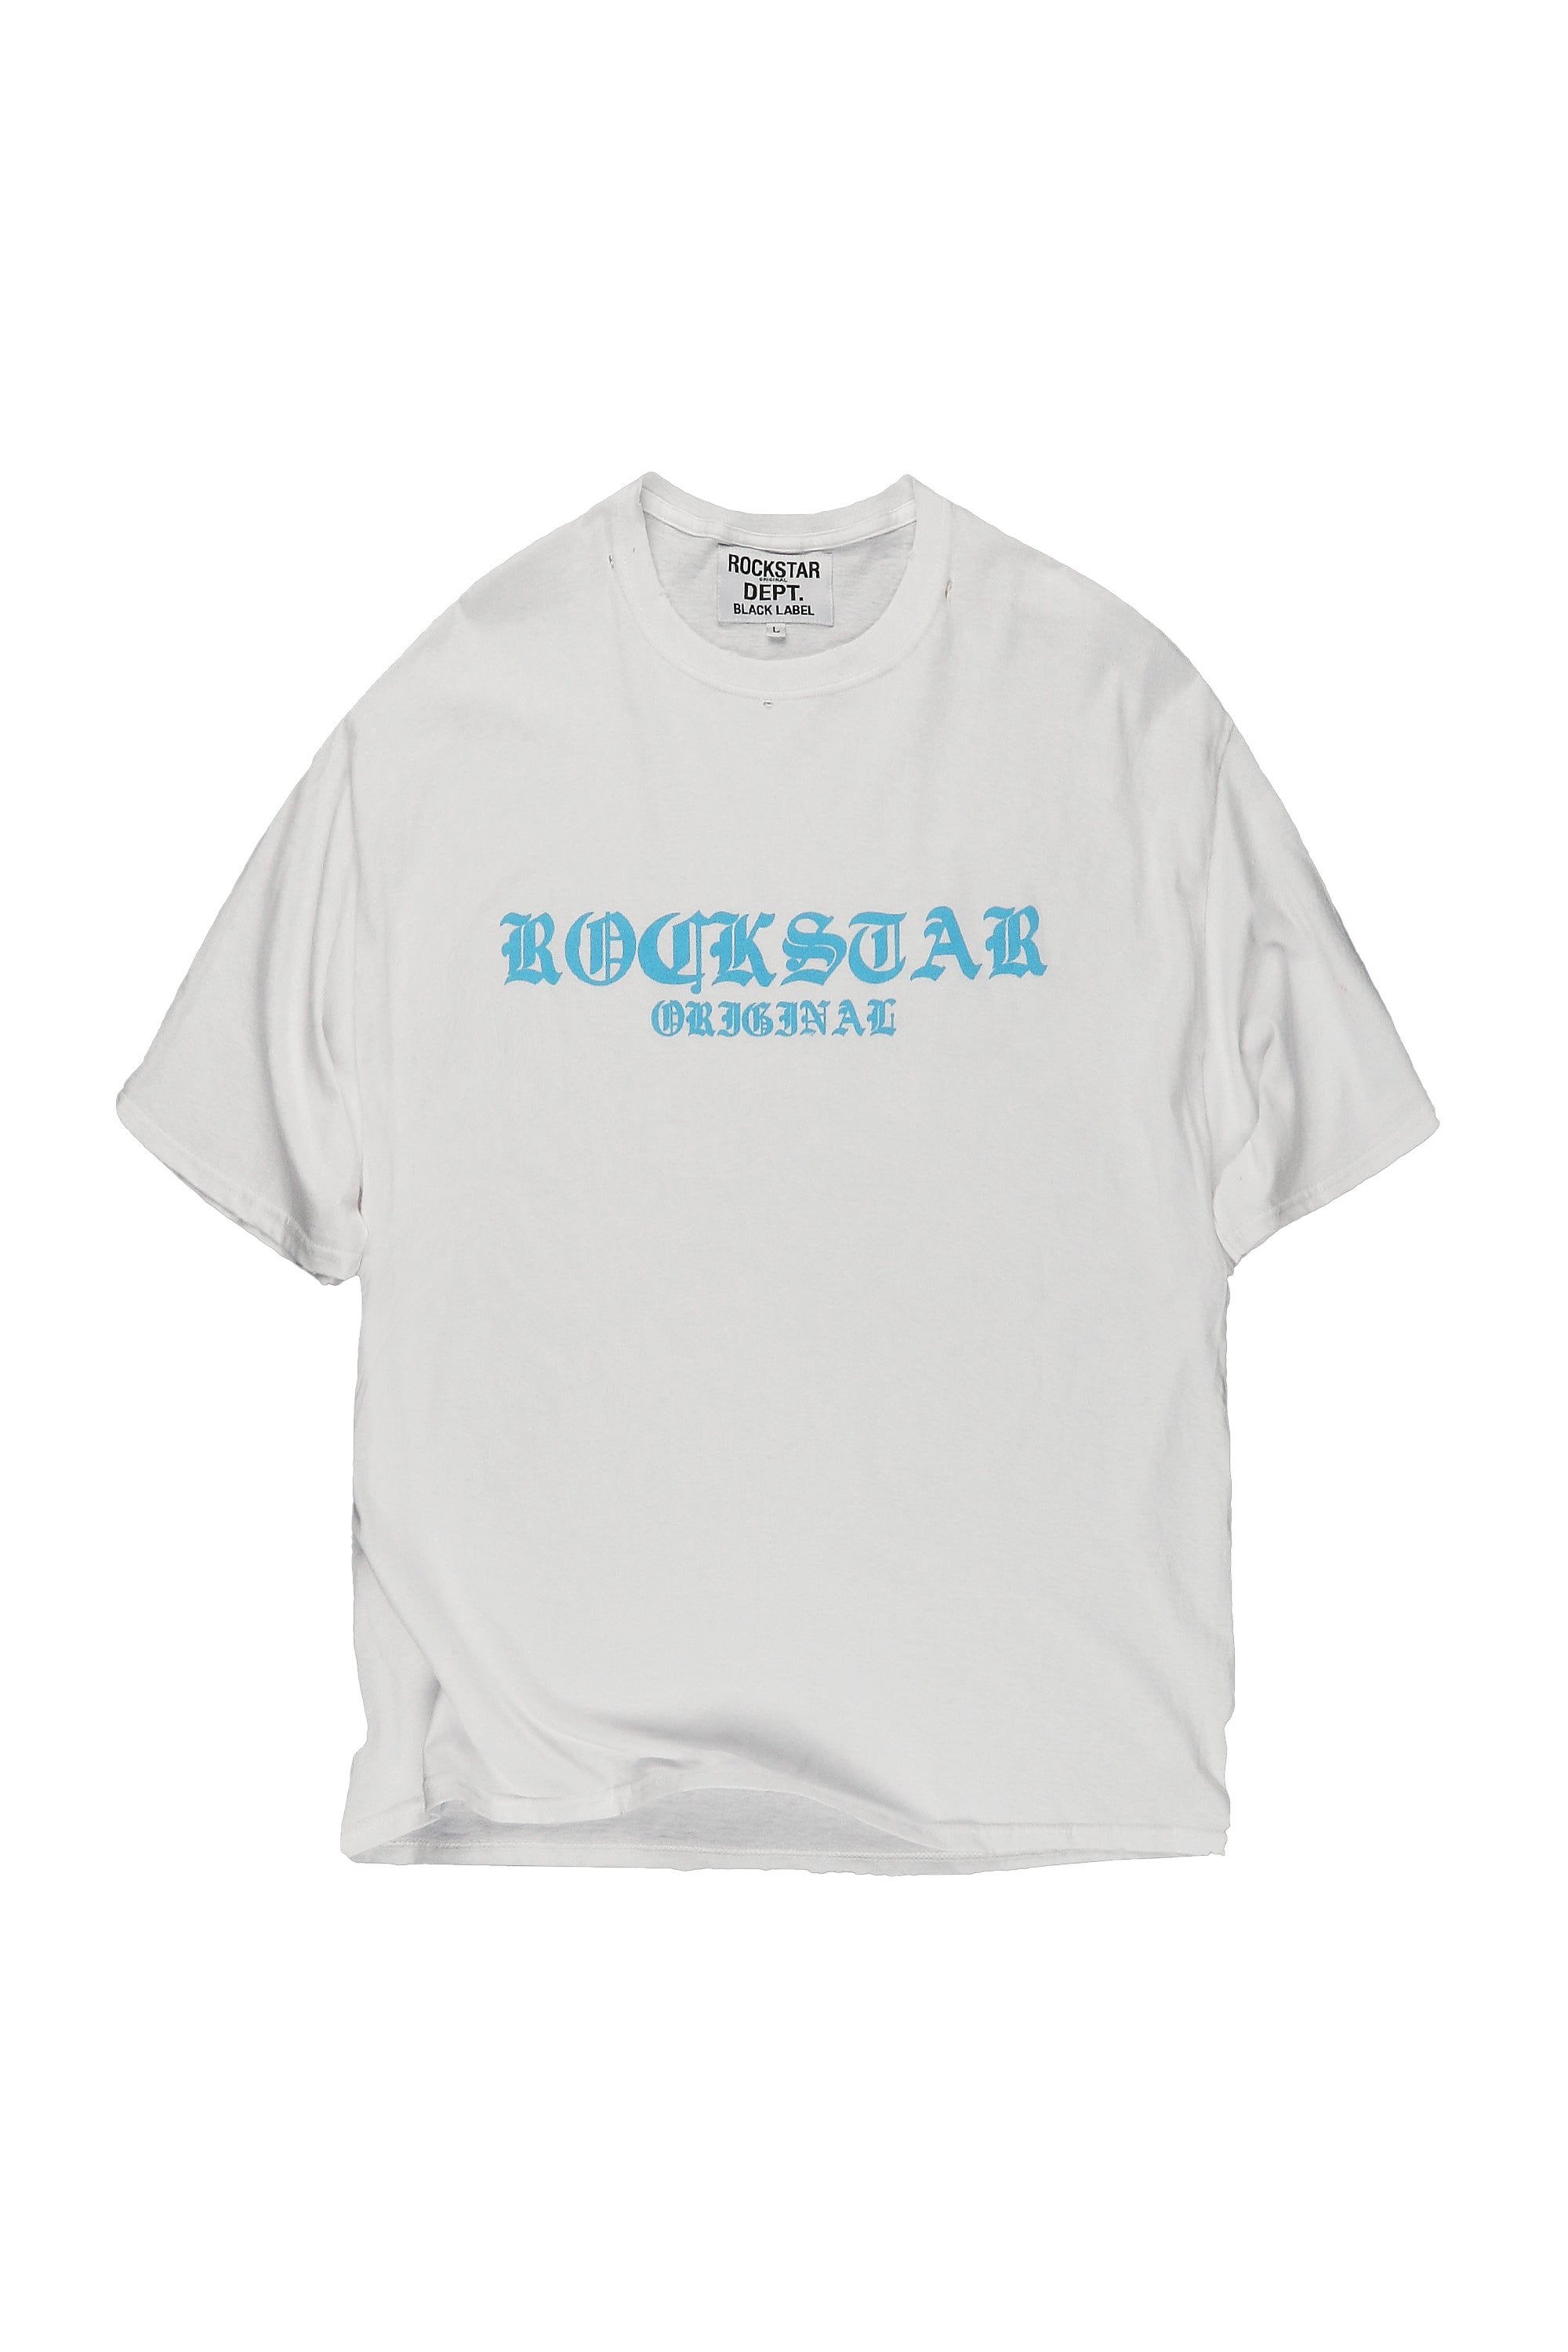 Rockstar Original Veeze White Graphic T Shirt AMAZON